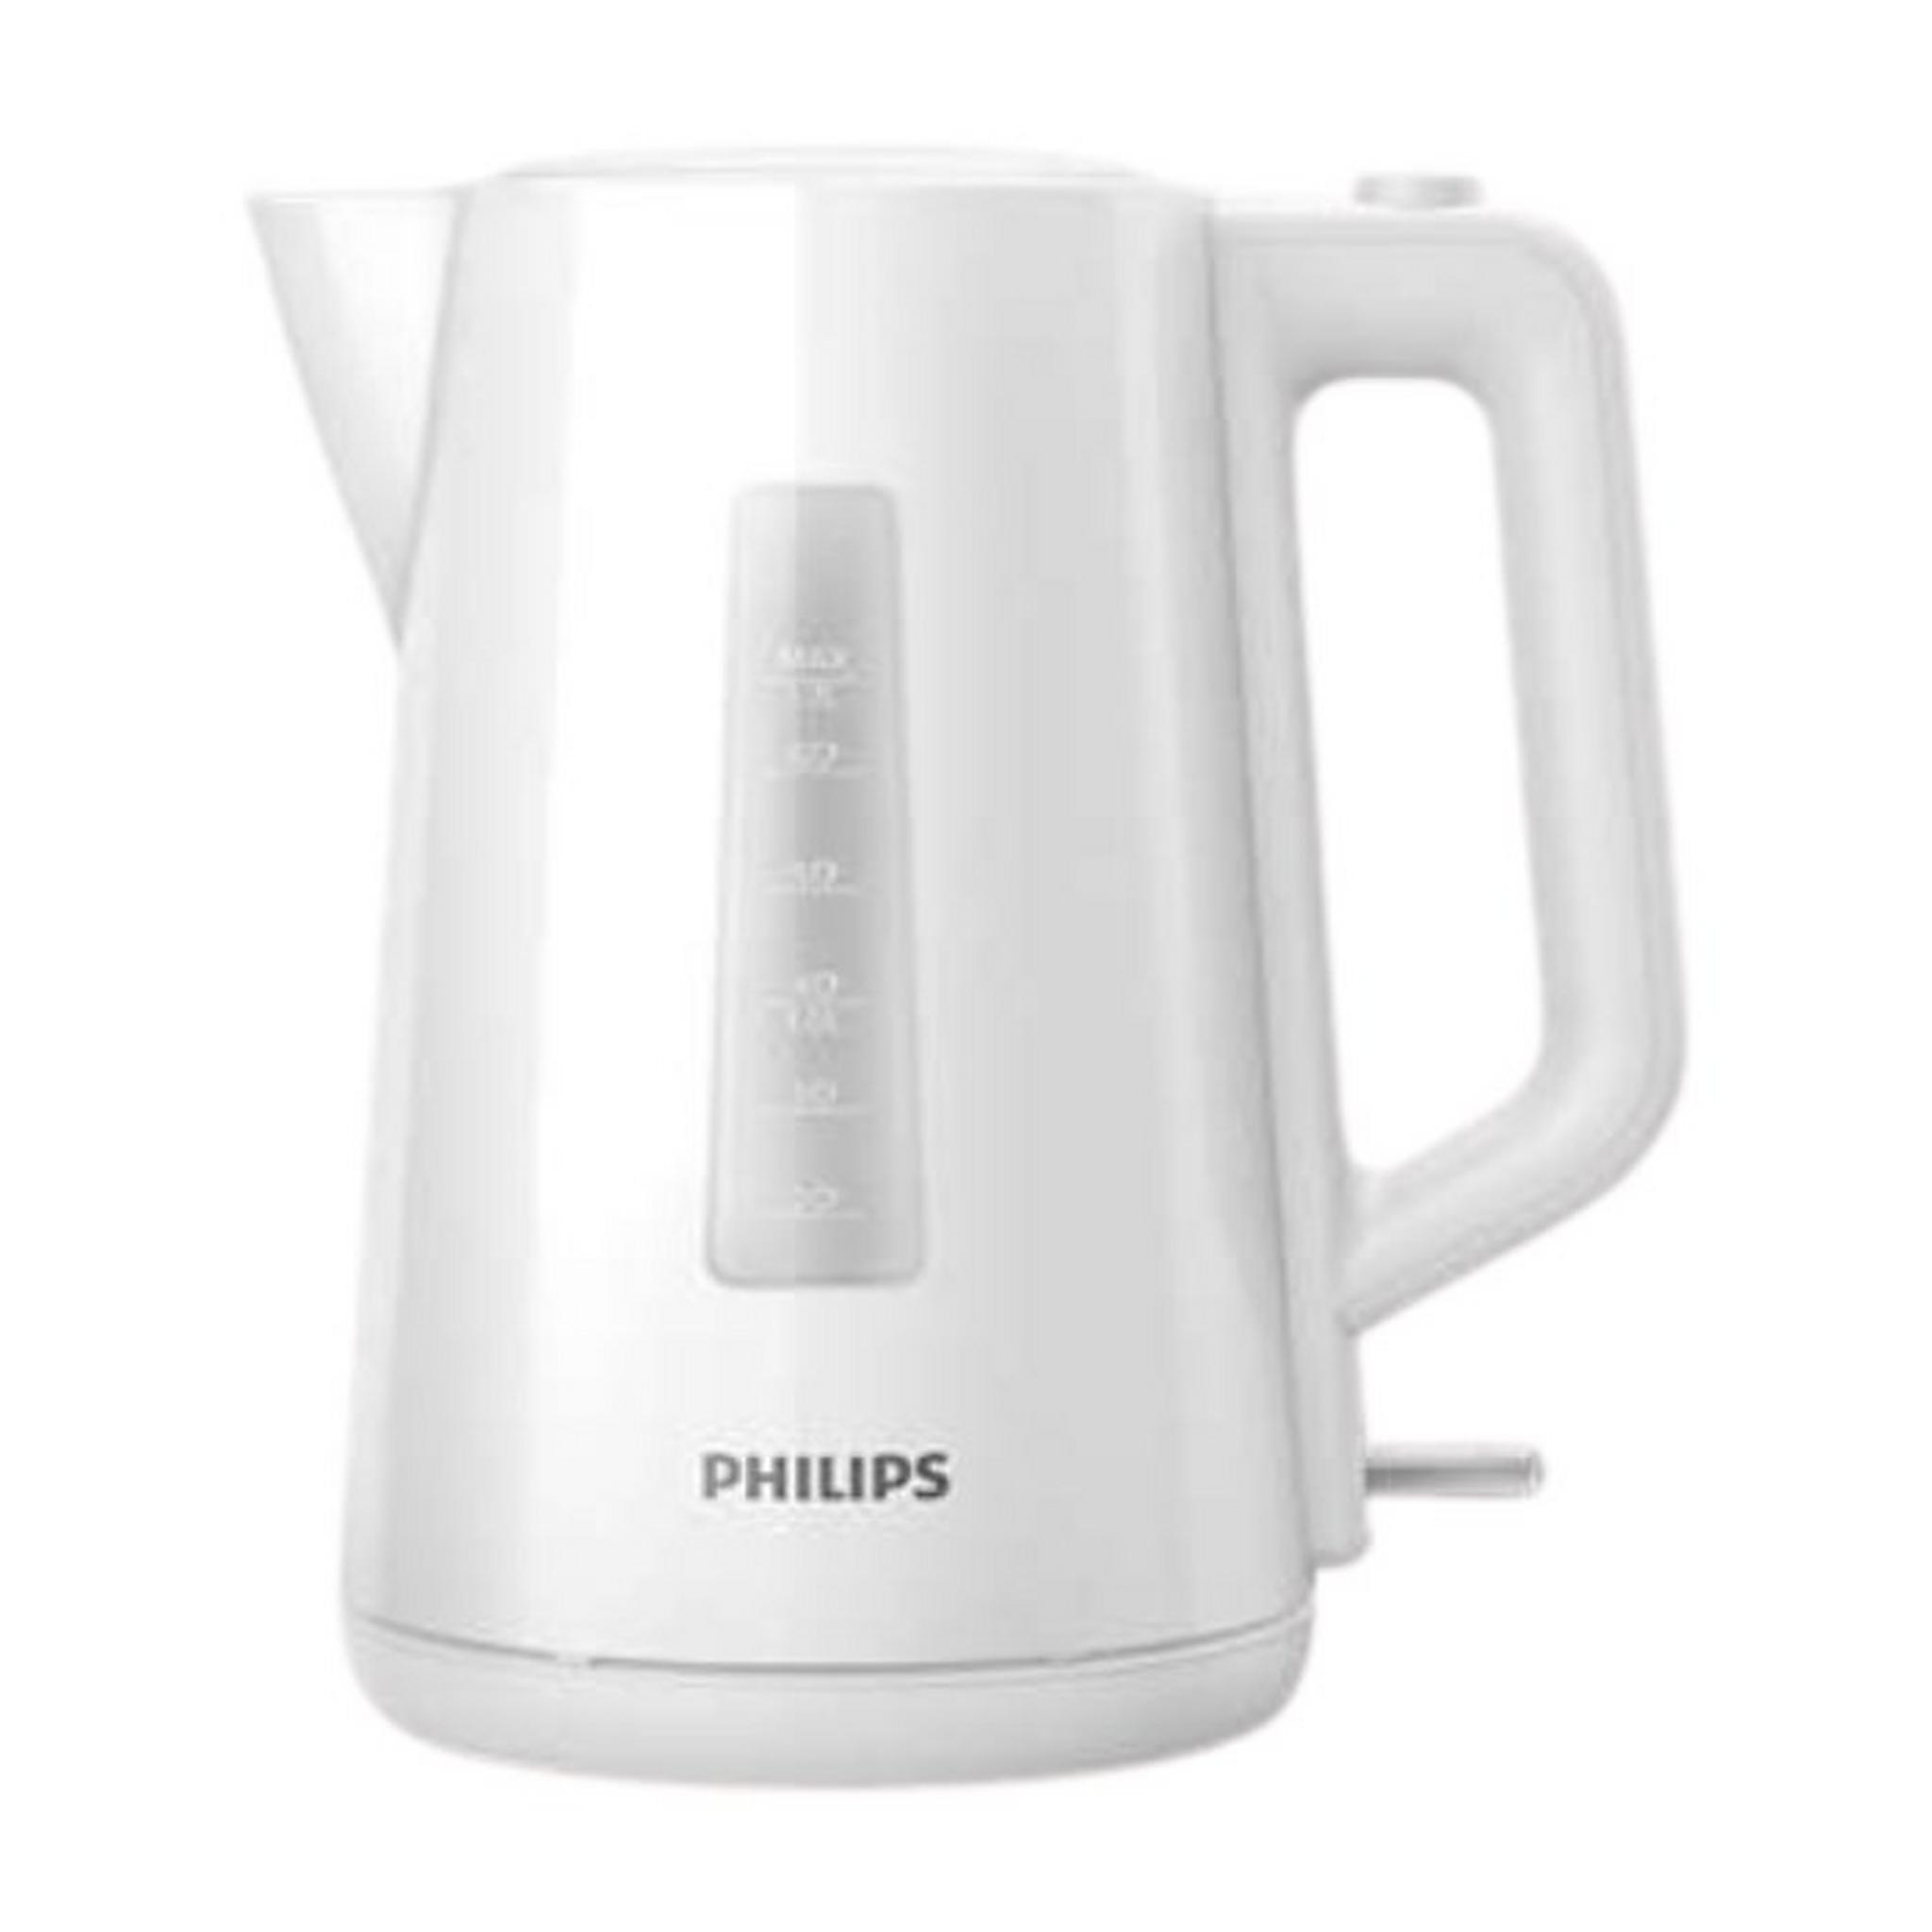 Philips Water Kettle, 2200W, 1.7L, HD9318/01 - White